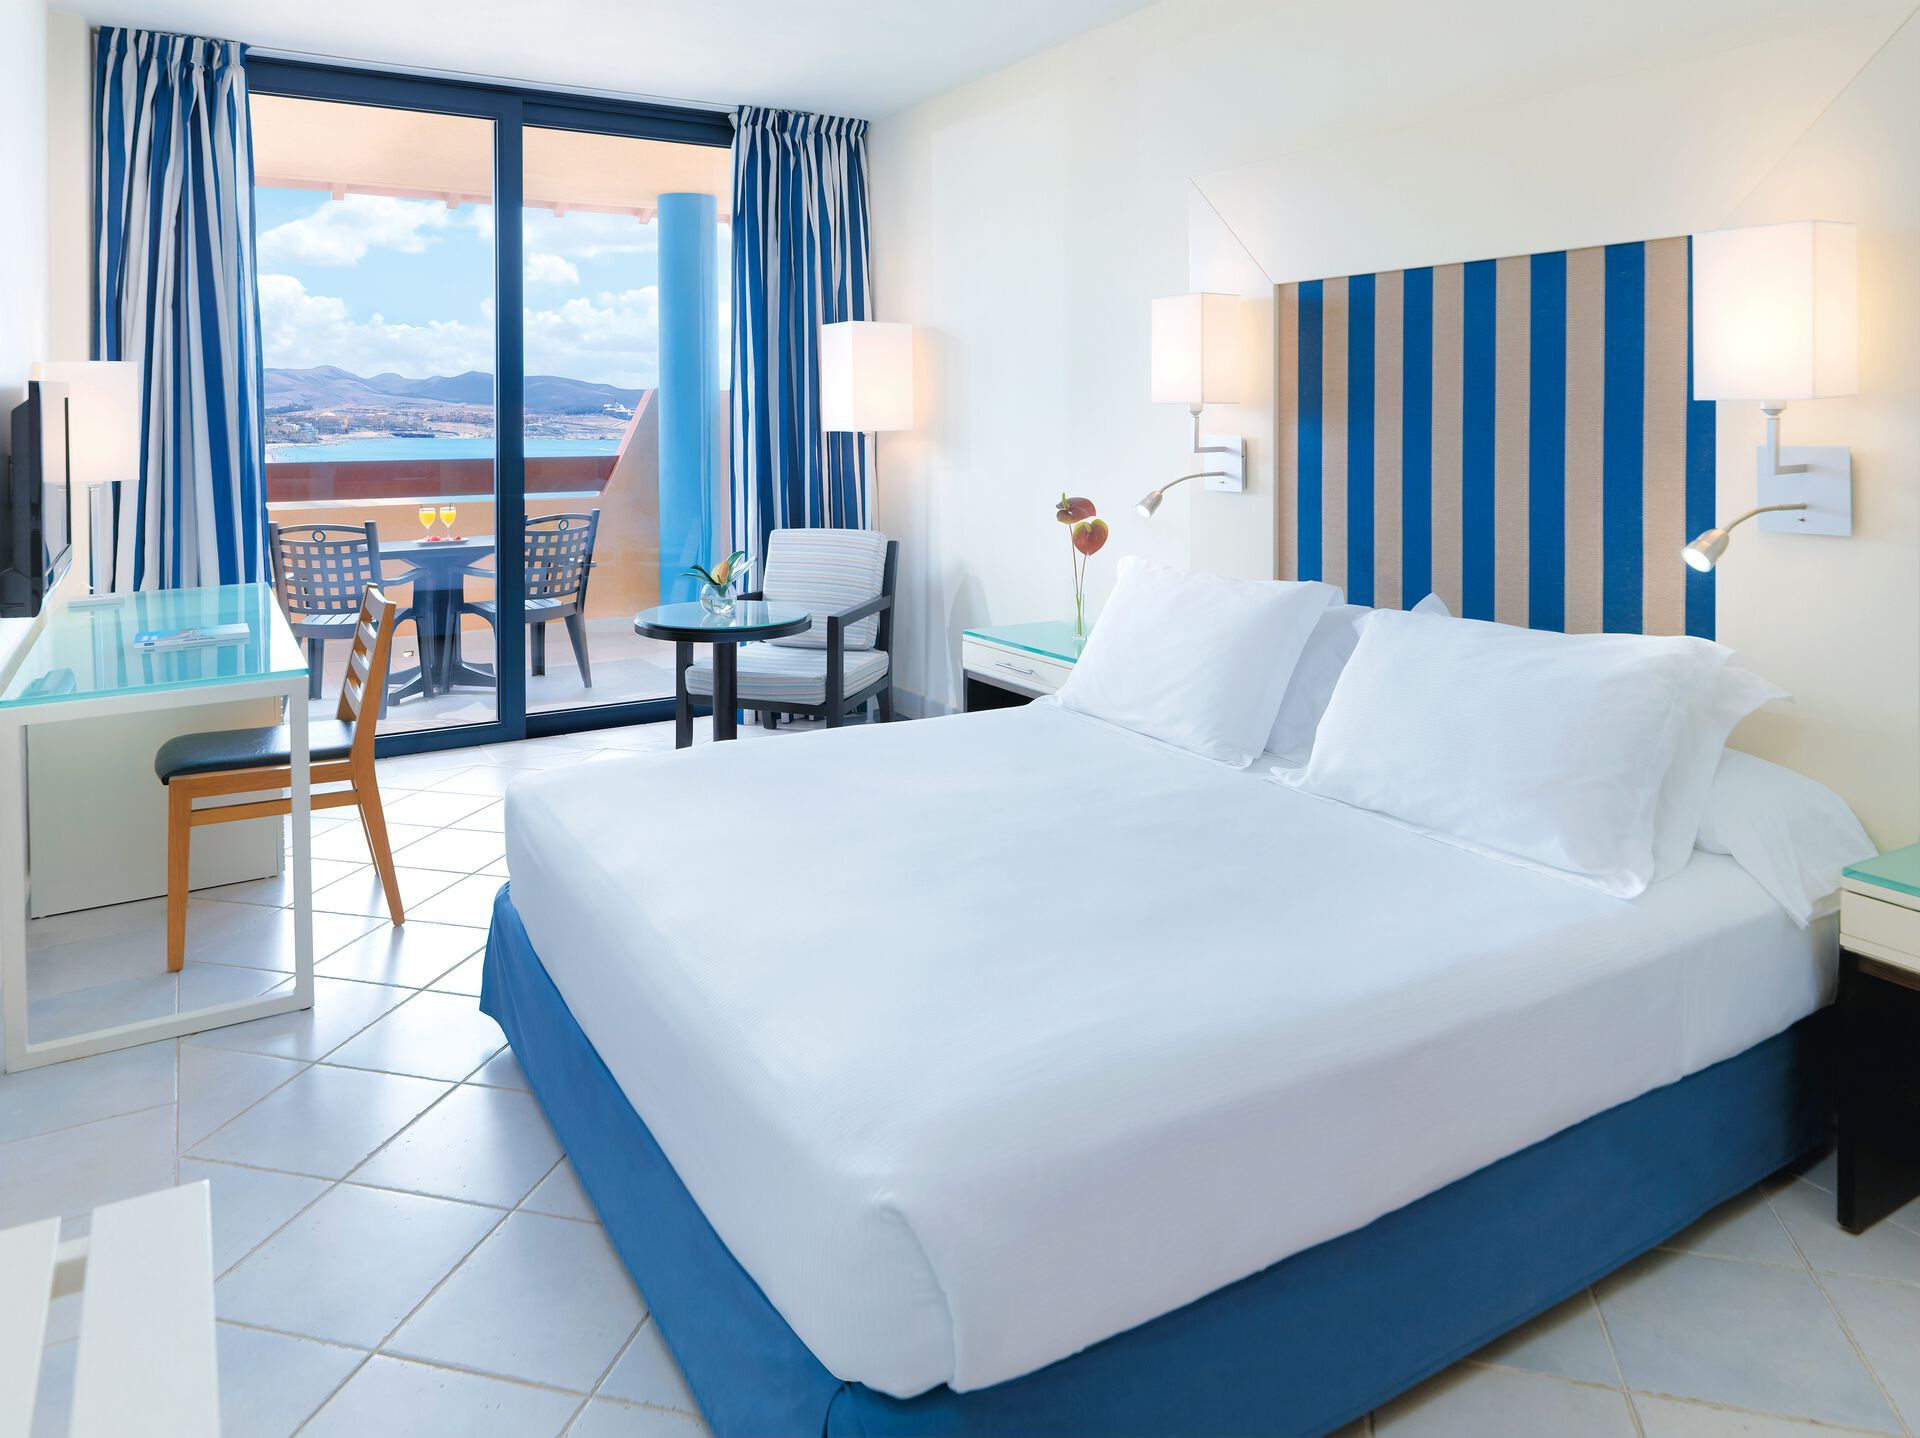 Canaries - Fuerteventura - Espagne - Hôtel H10 Tindaya 4*